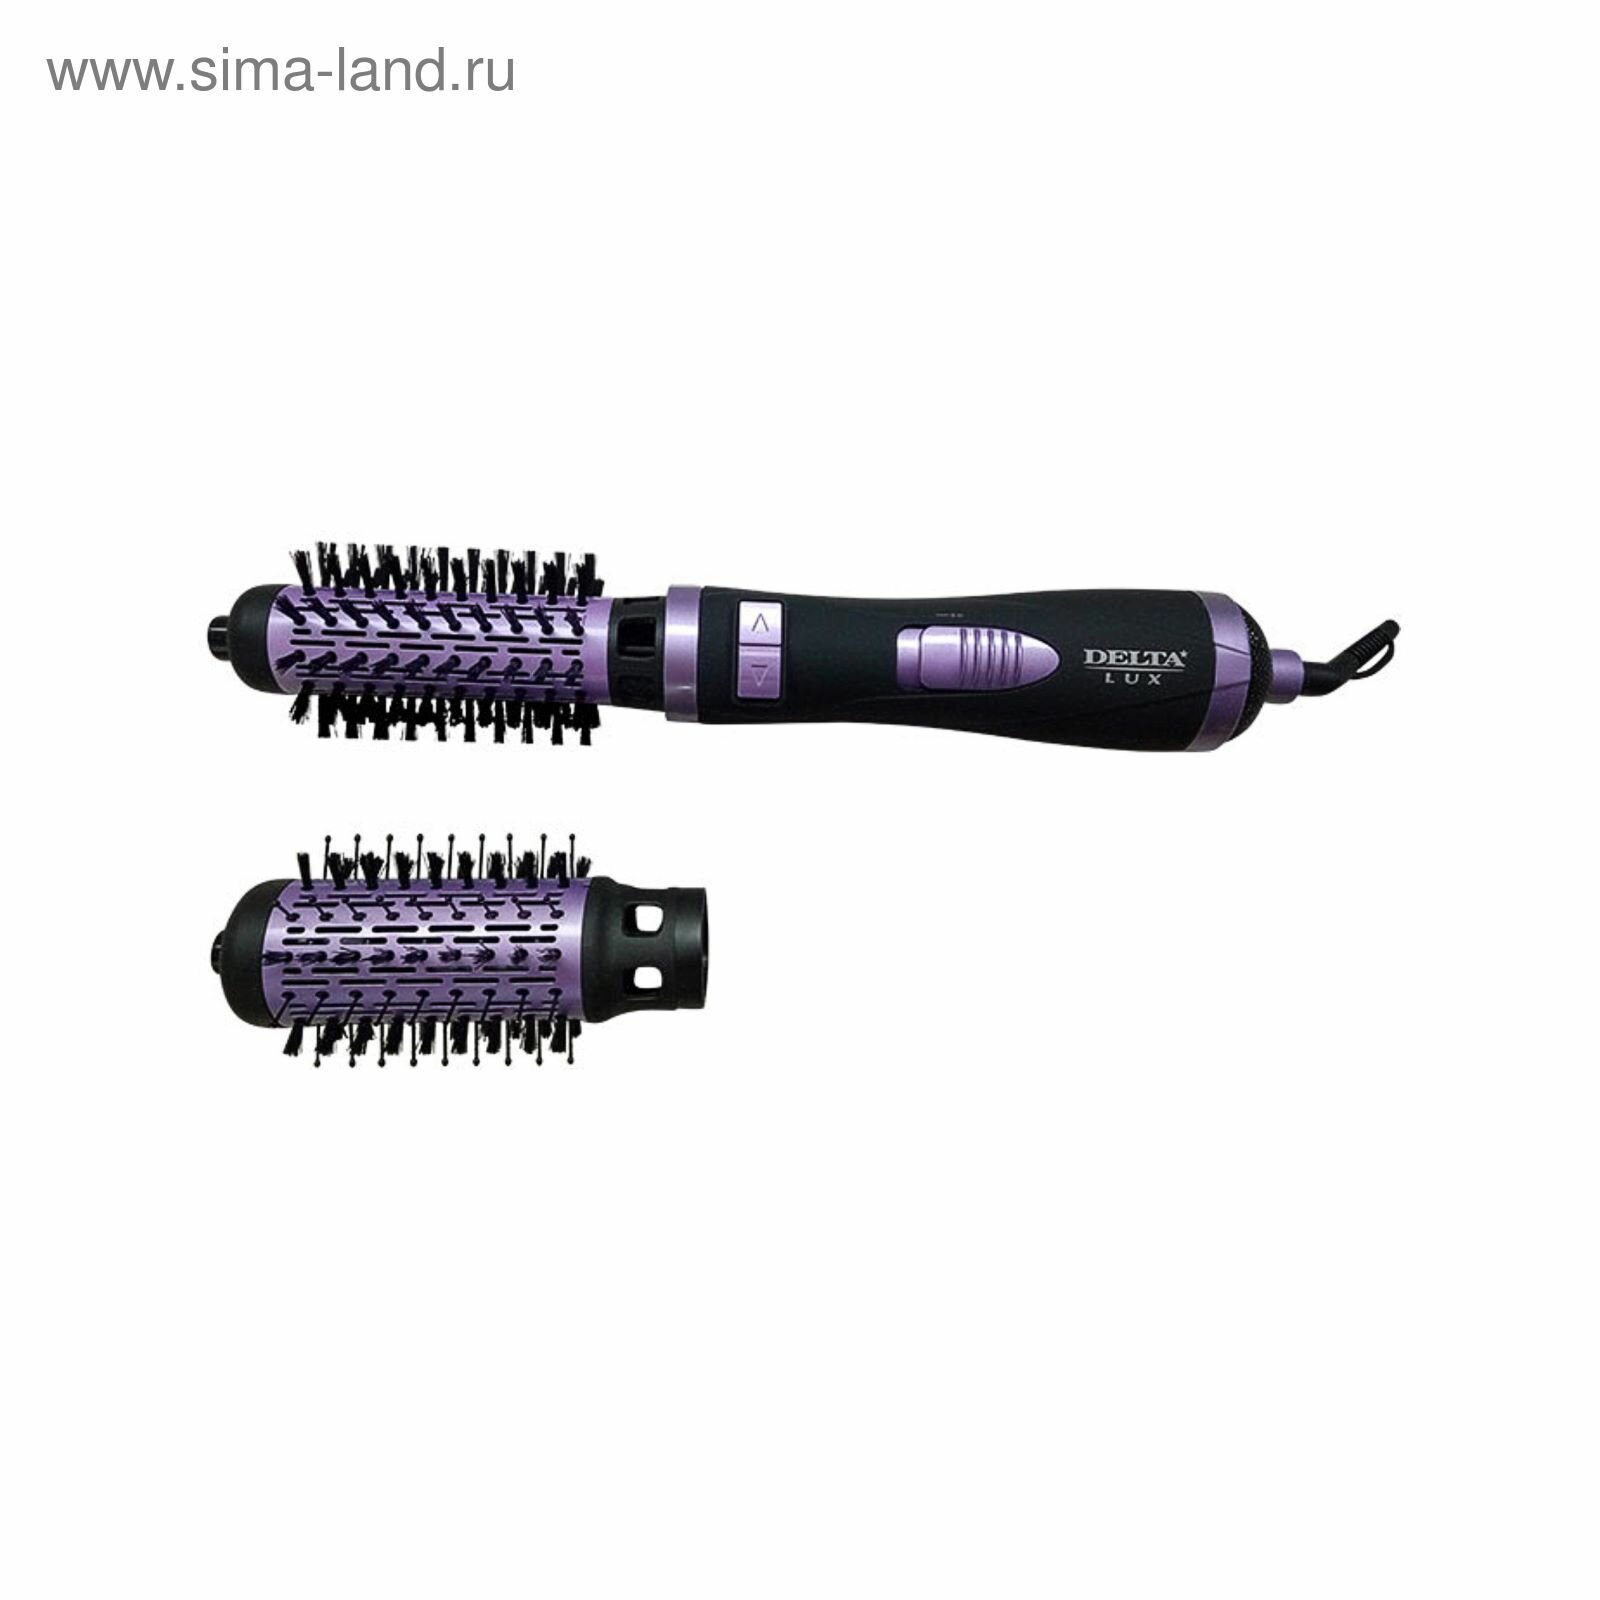 Фен-щетка LUX DL-0443R, 1000 Вт, 2 режима, 2 насадки, черно-фиолетовая